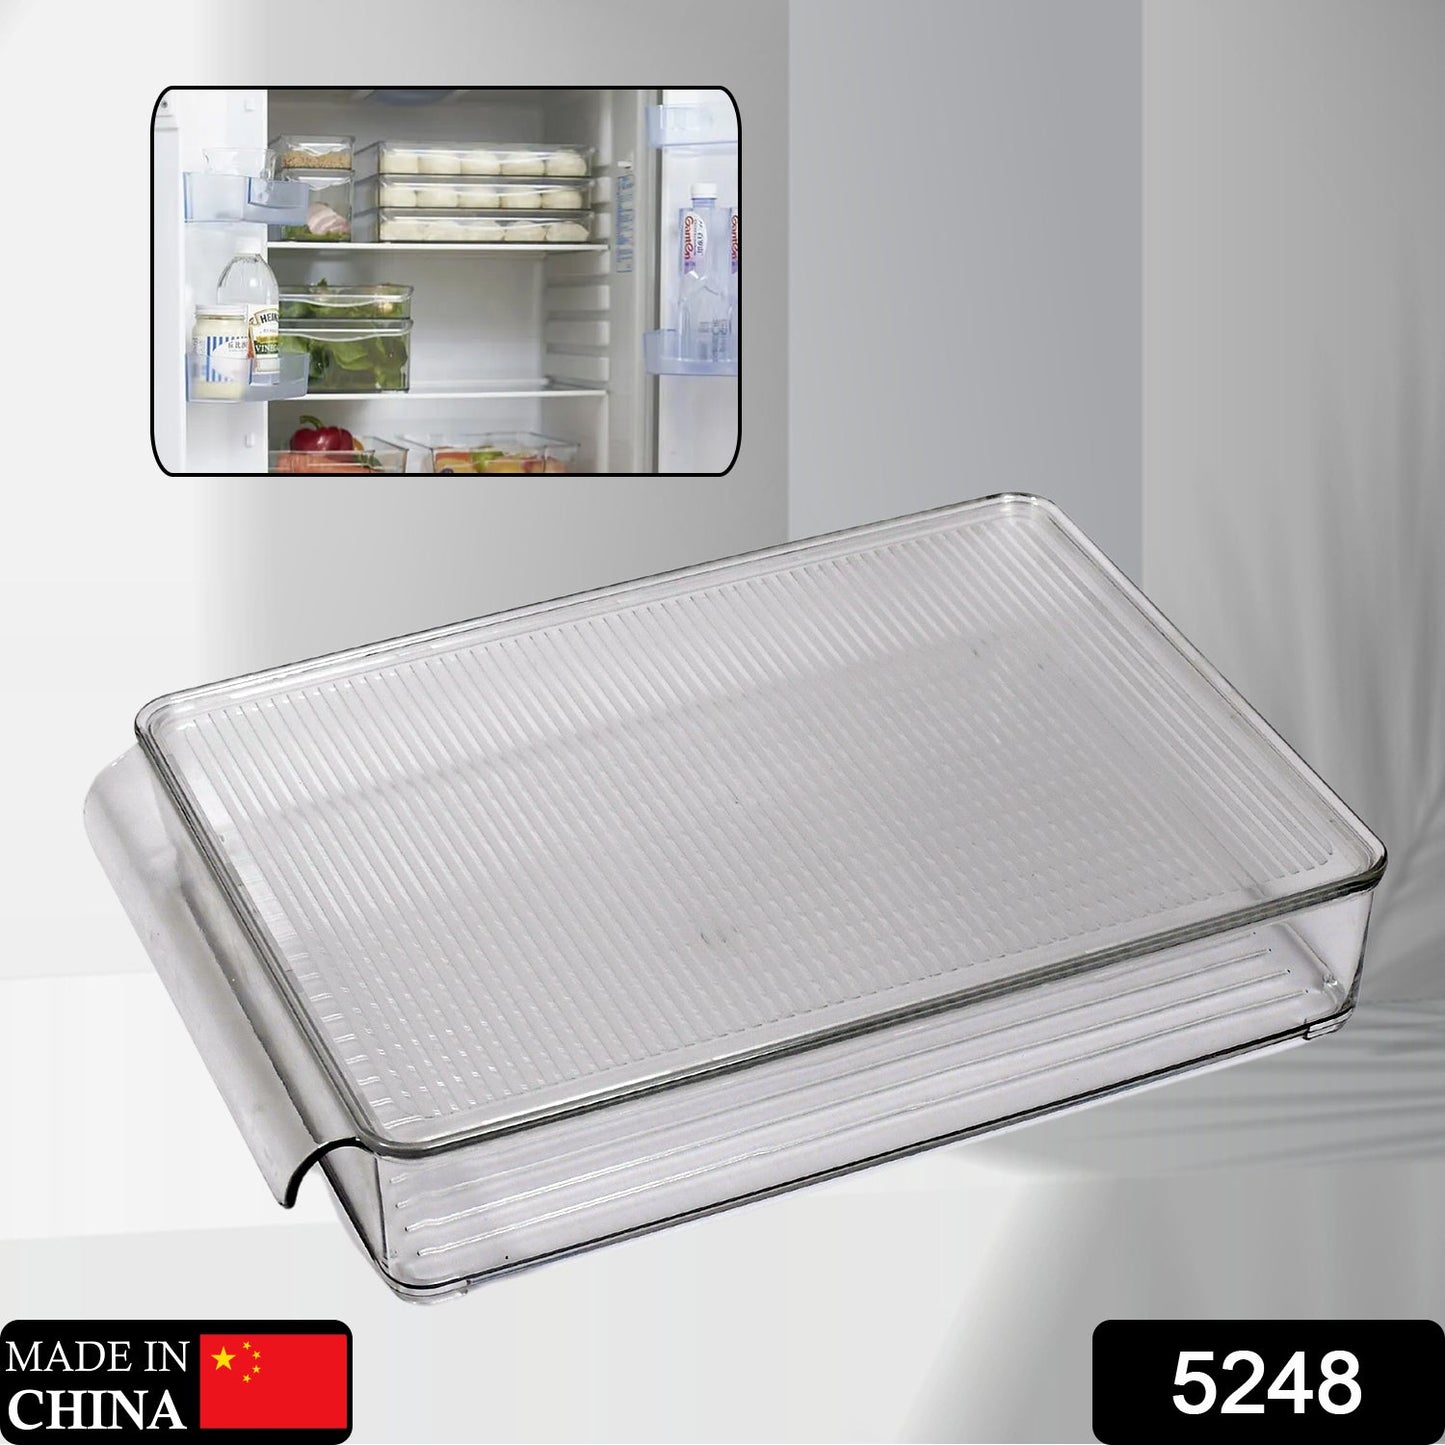 5248 Refrigerator Organizer Bins Stackable Fridge Organizers for Freezer, Kitchen, Cabinets Box DeoDap